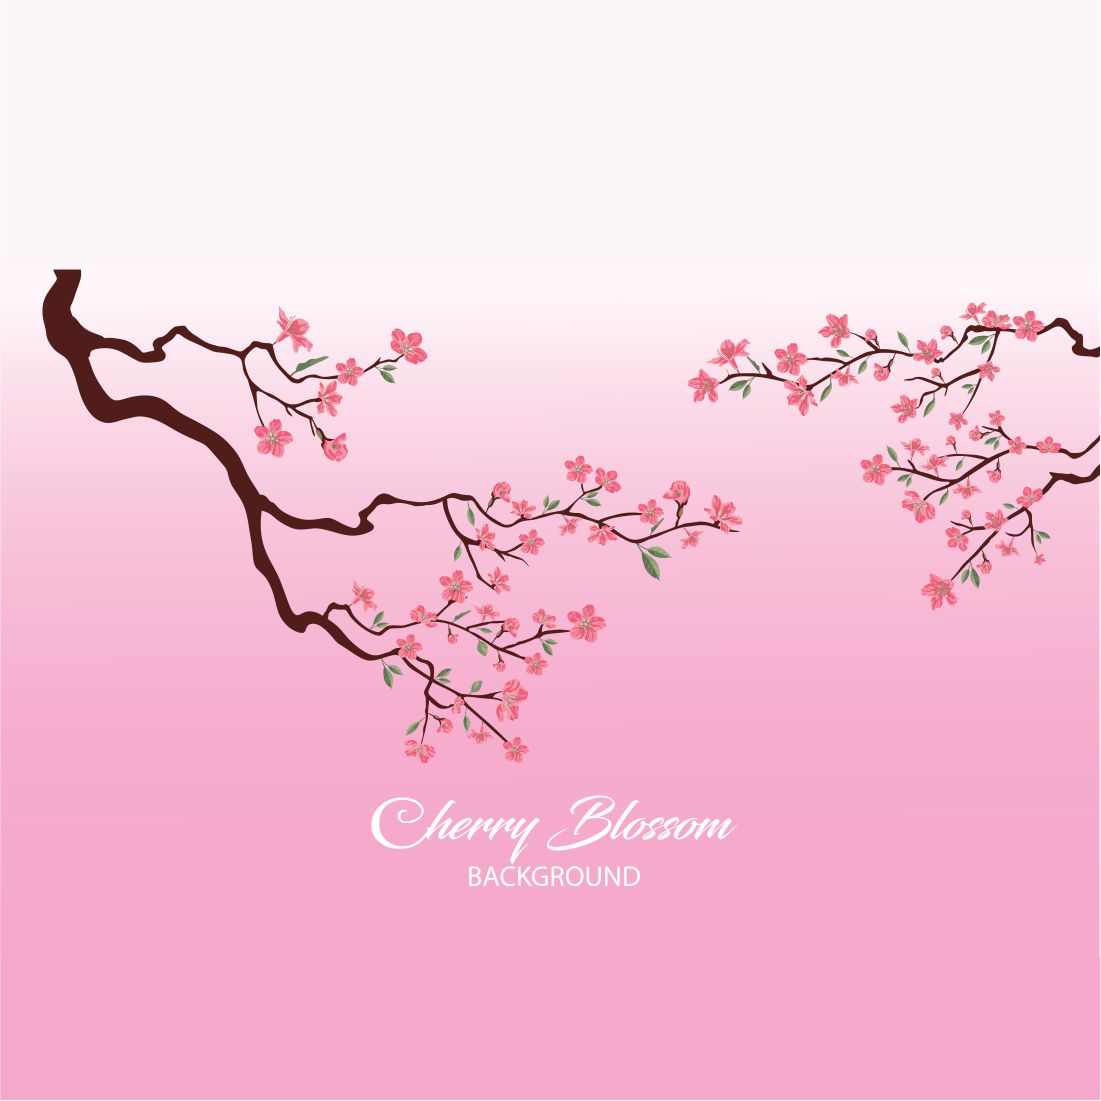 Cherry blossom Illustration cover image.